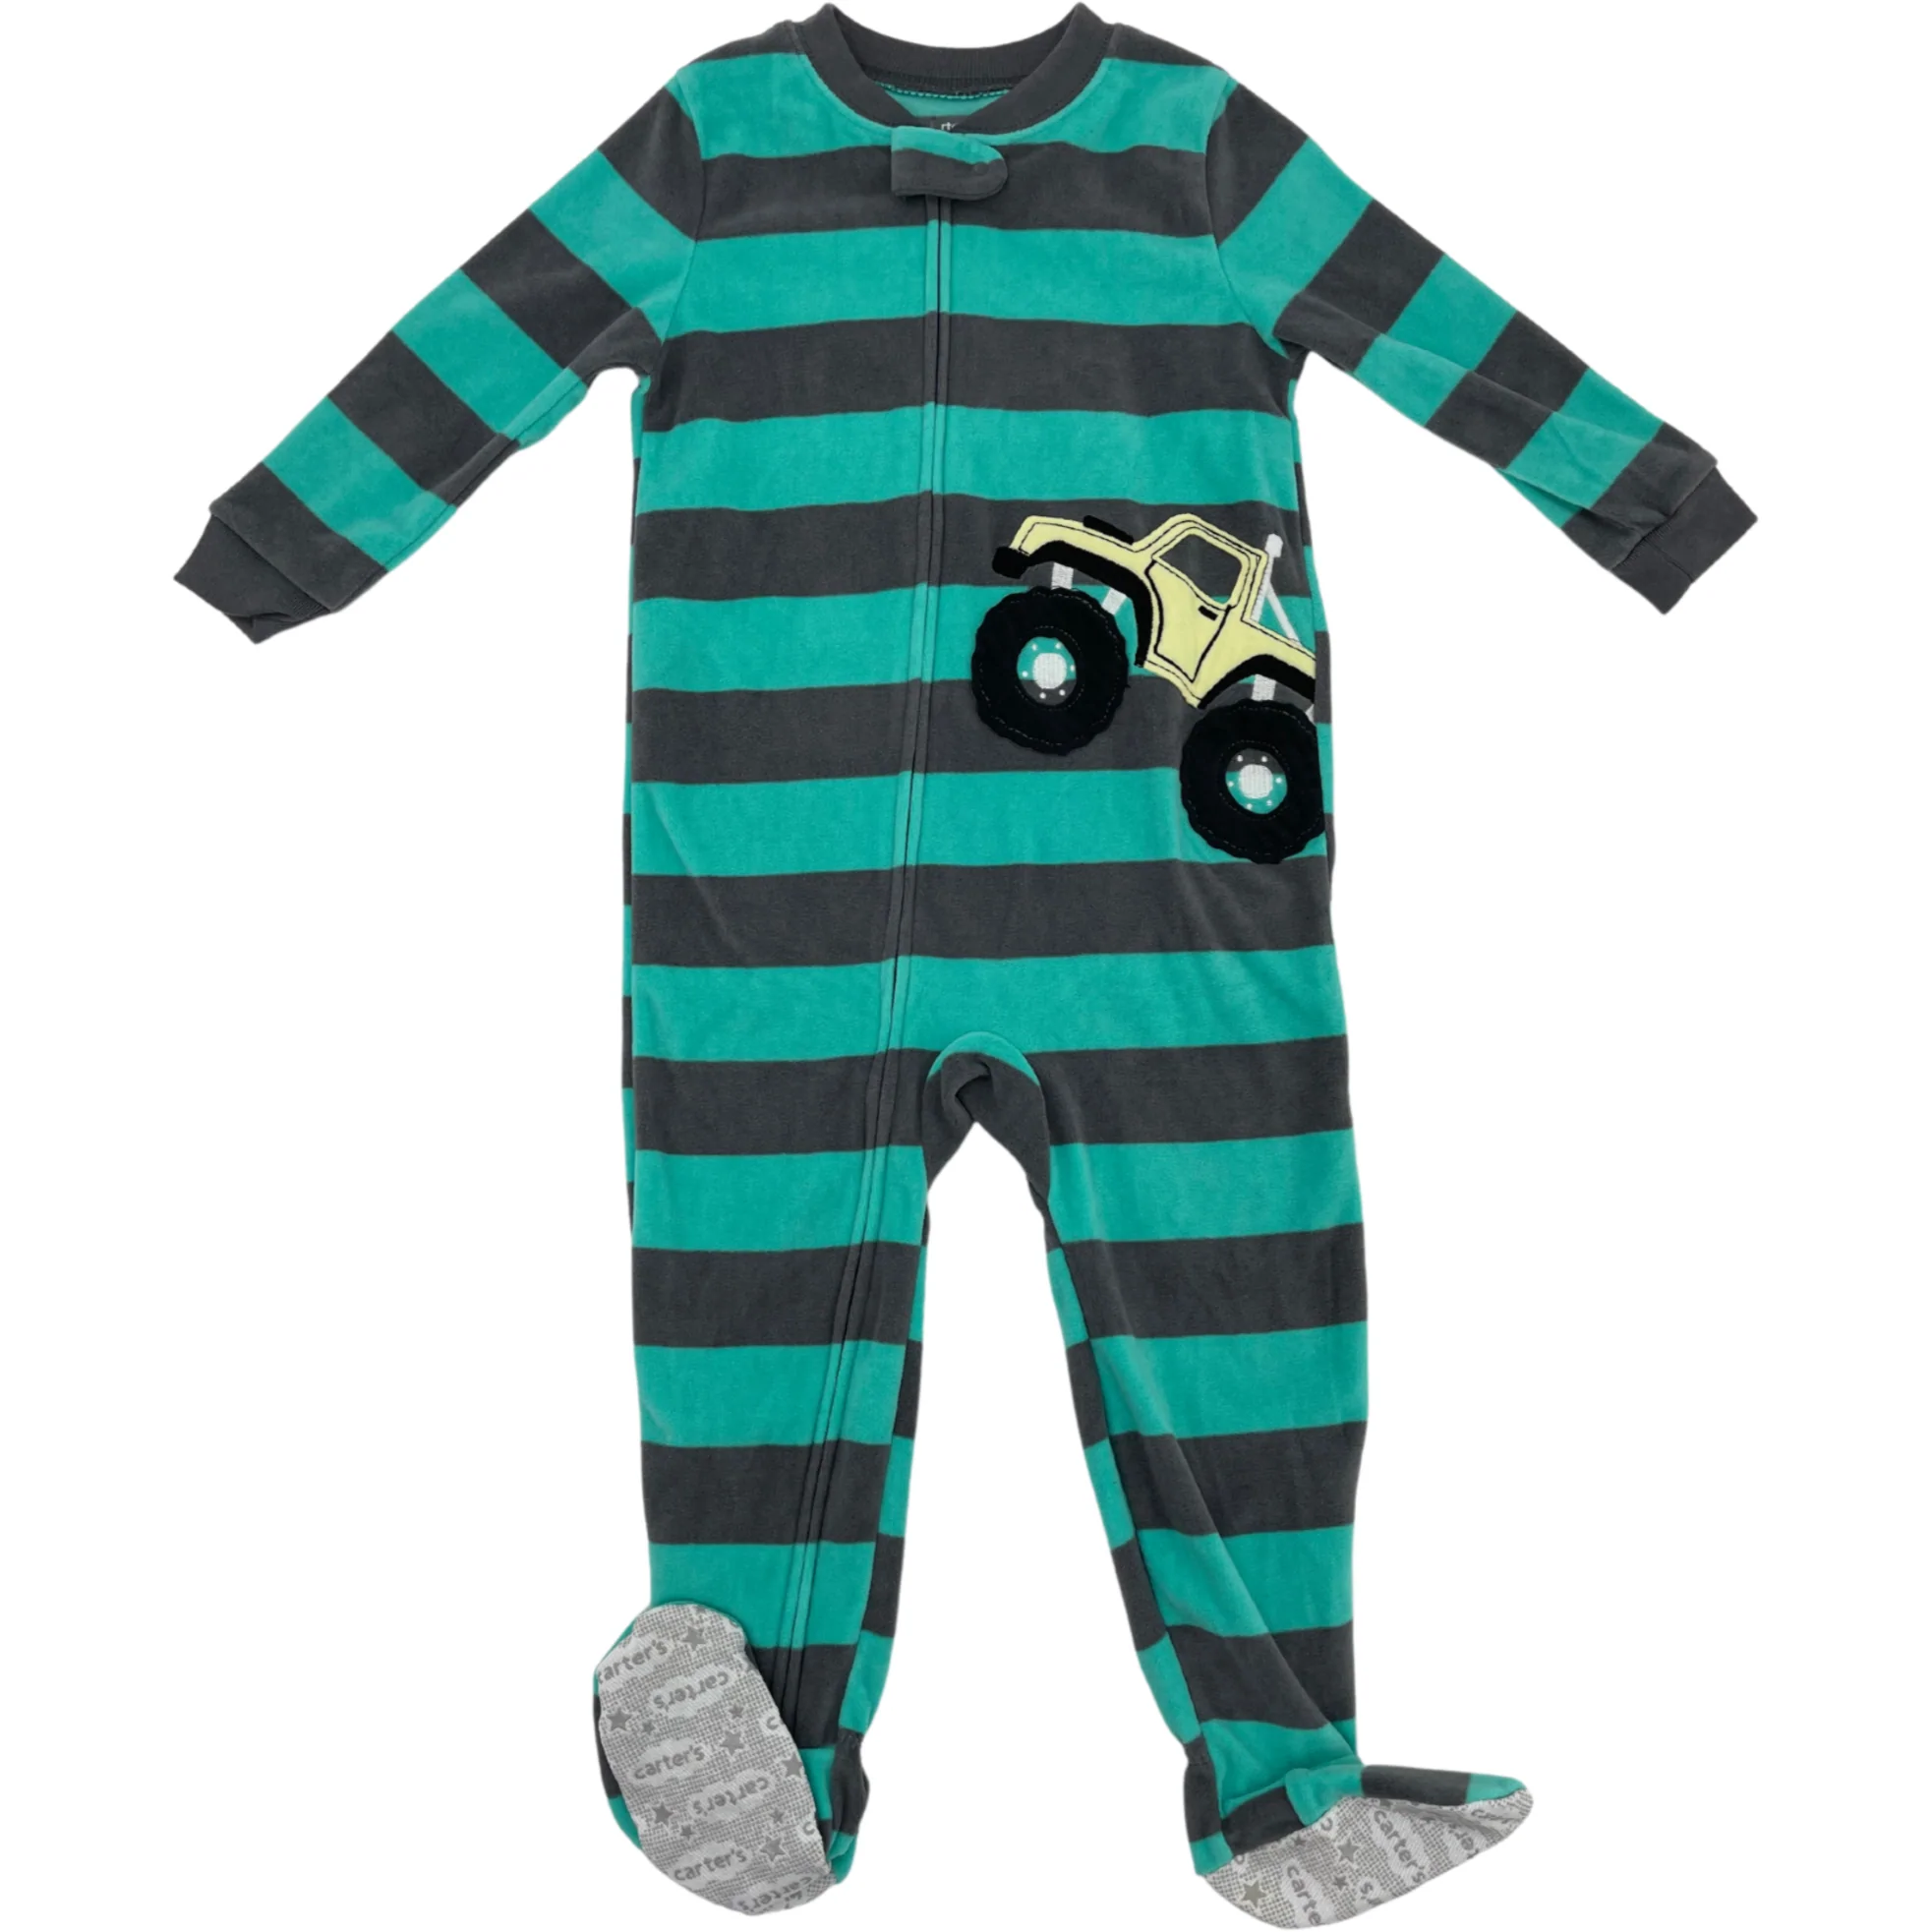 Carter's Toddler Boy's Sleeper / One Piece Pyjama / Green & Grey / Monster Truck Theme / Size 3T